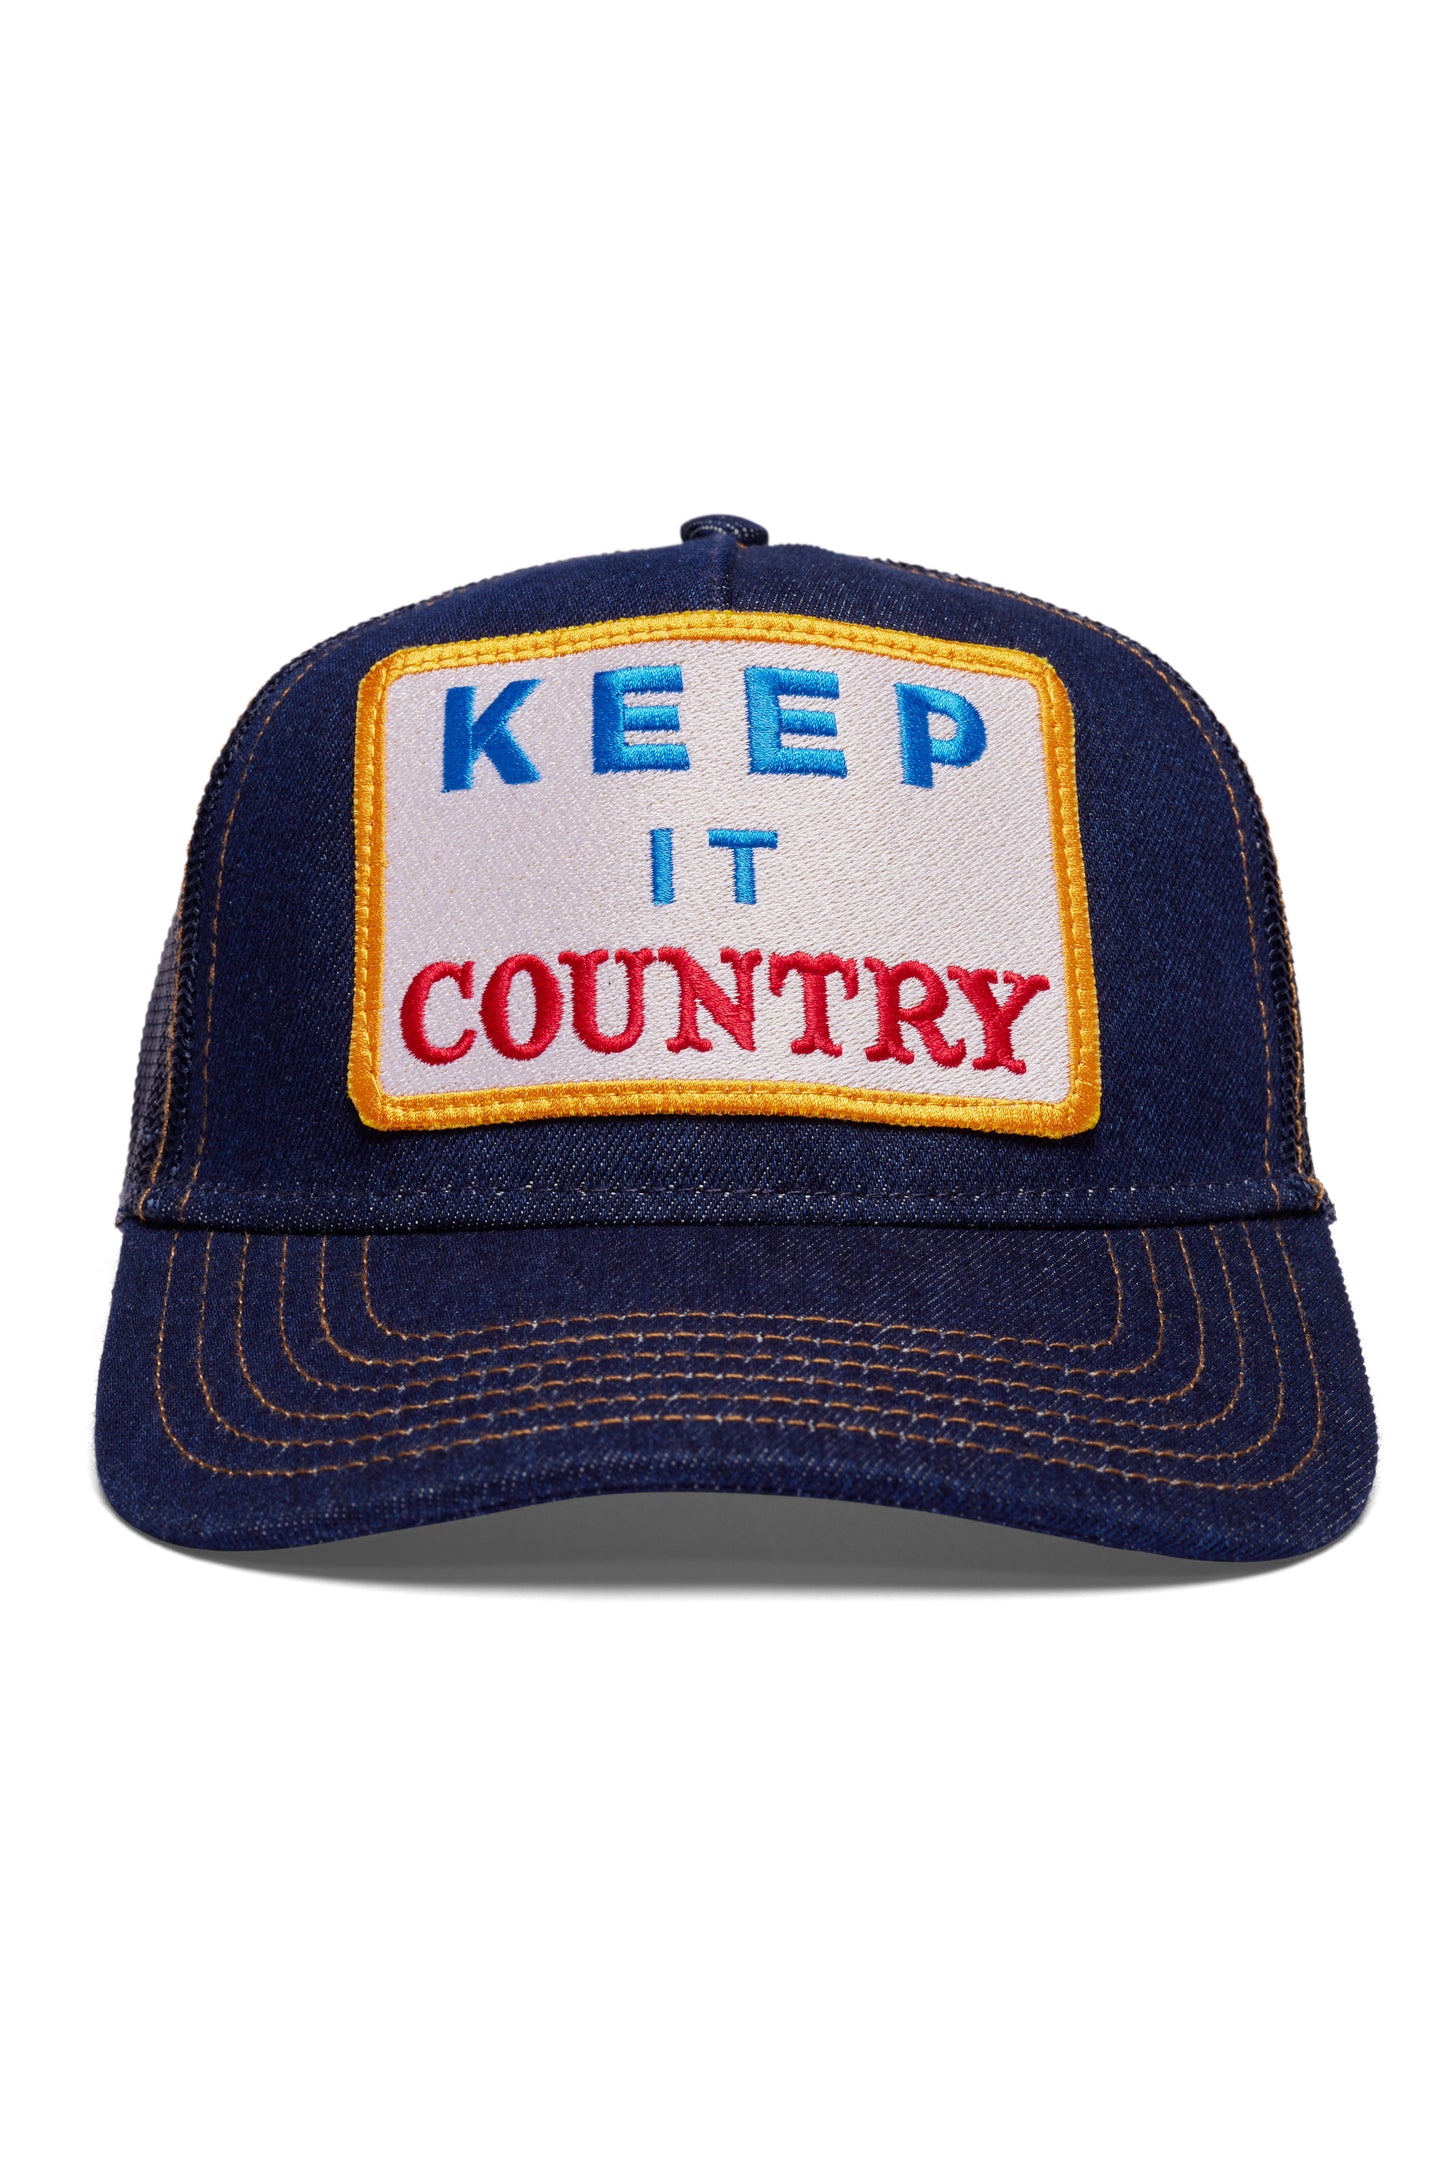 Keep It Country - Denim